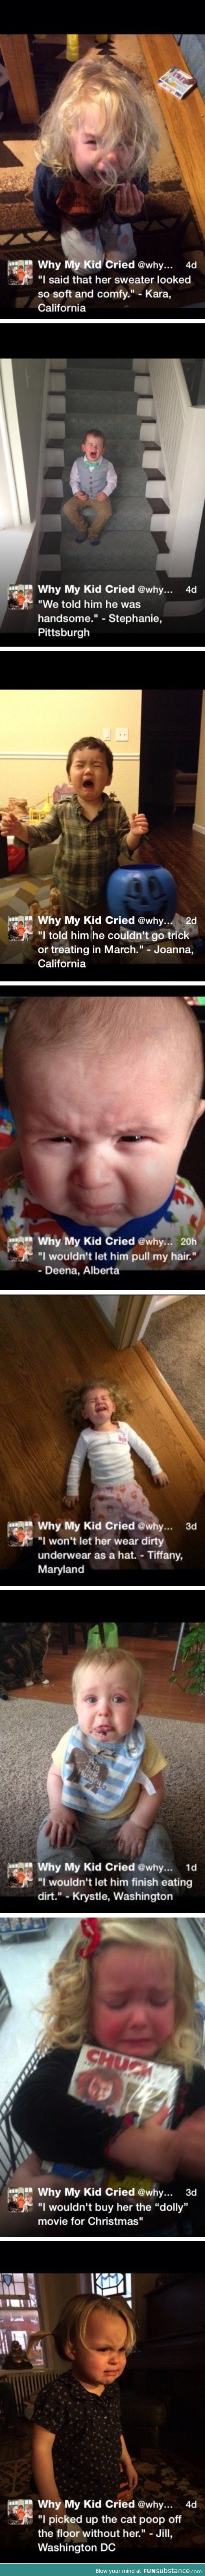 Why my kid cried